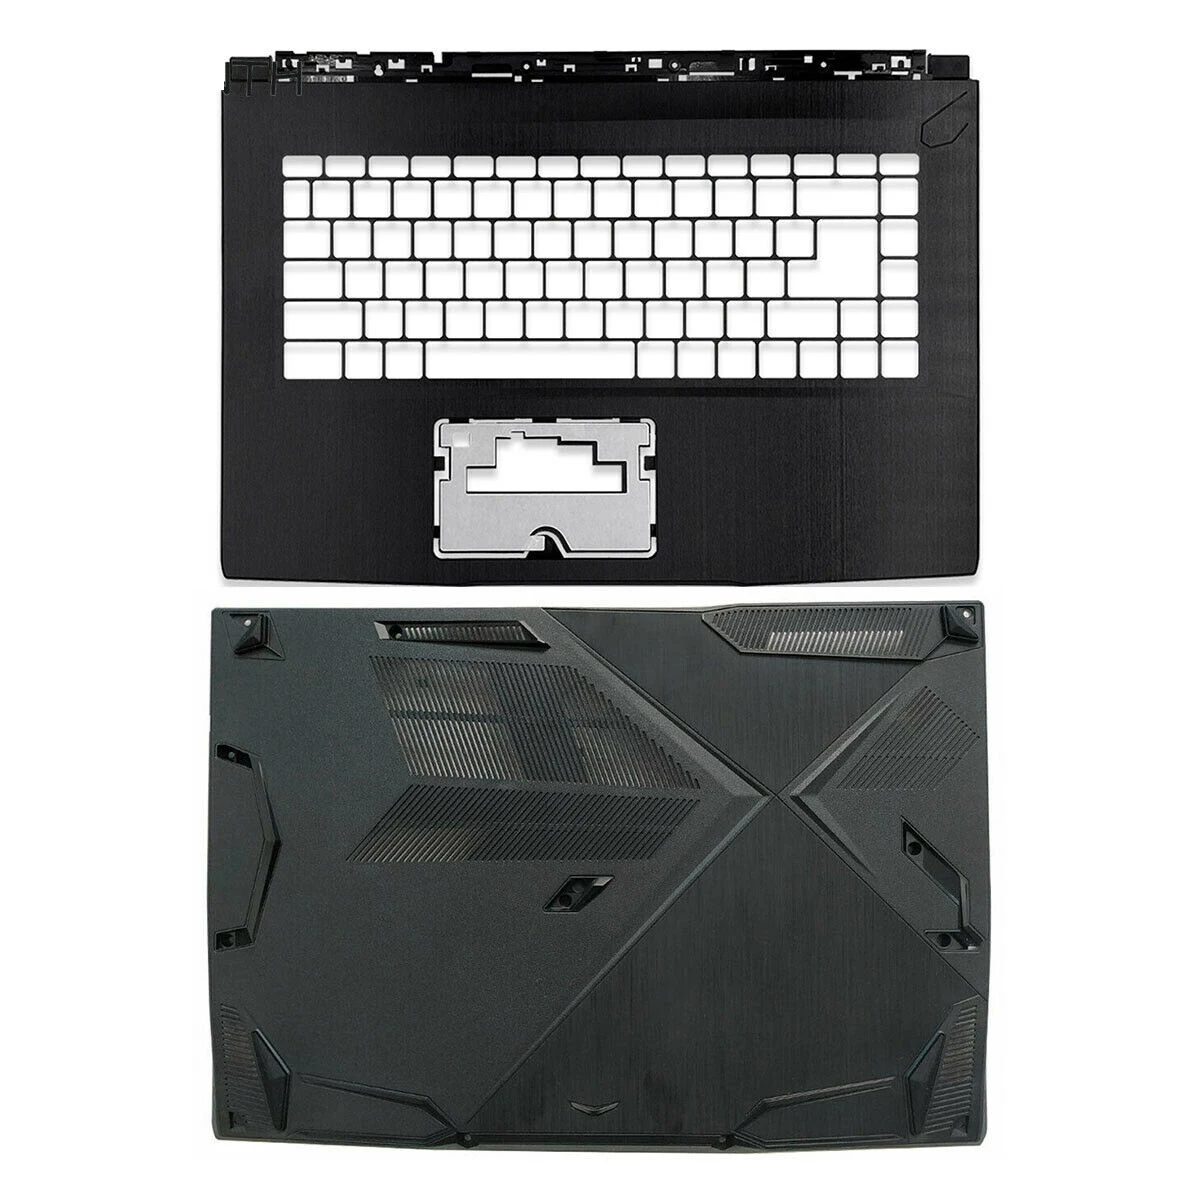 Nova Palmrest Superior Mais Inferior Case Capa para Msi Gf63 Gf63vr 8rc 8rd Ms16r1 Laptop Repair Components